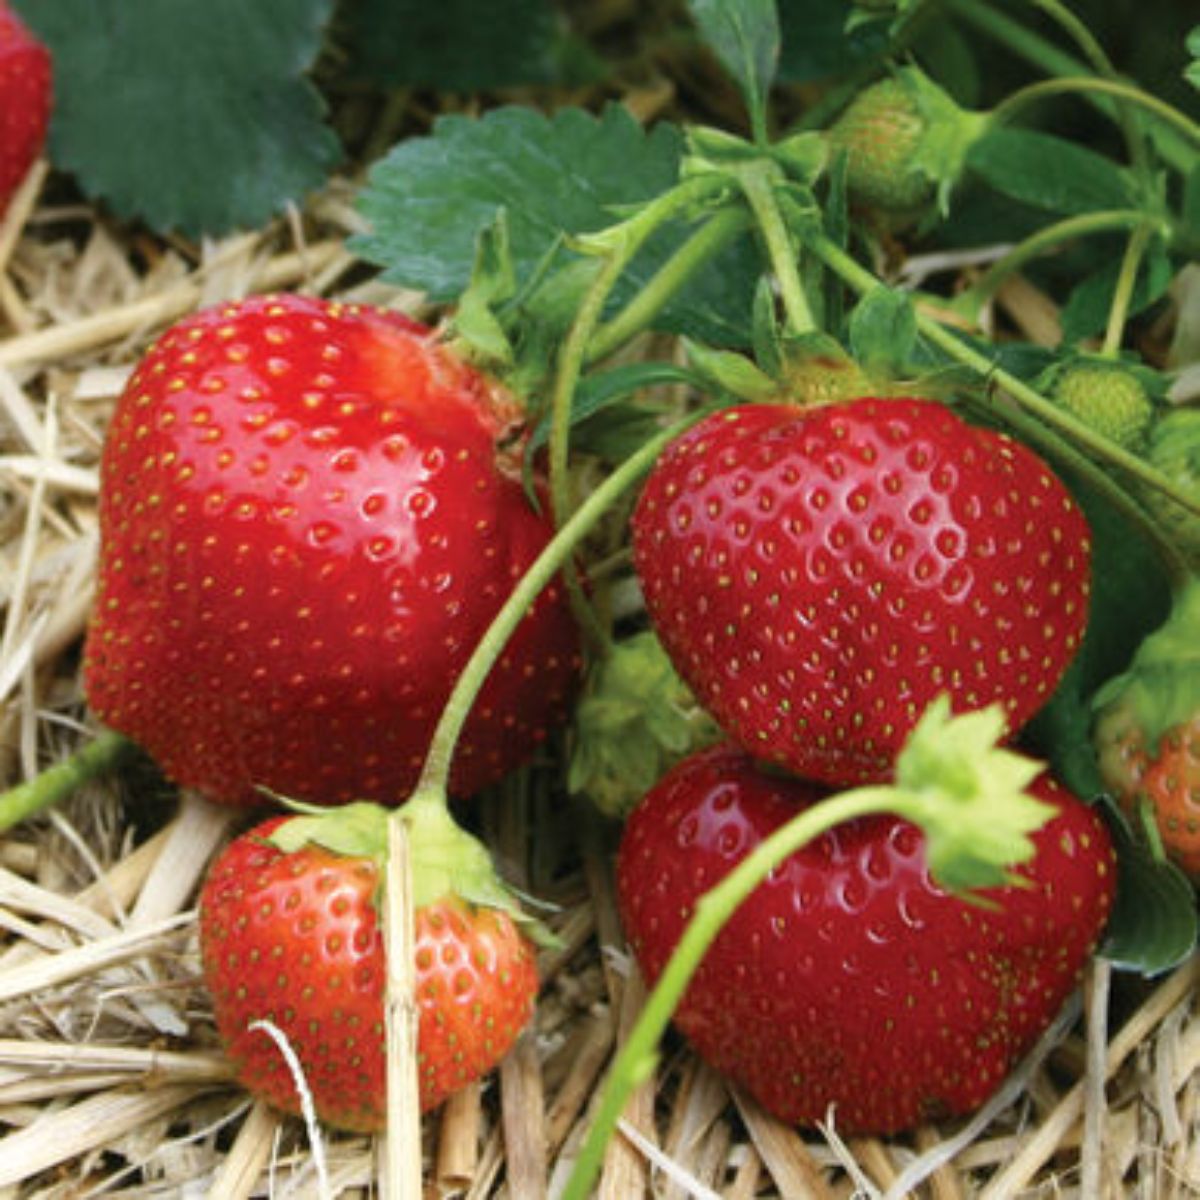 Fresh ripe galletta strawberries in a straw mulch close-up.